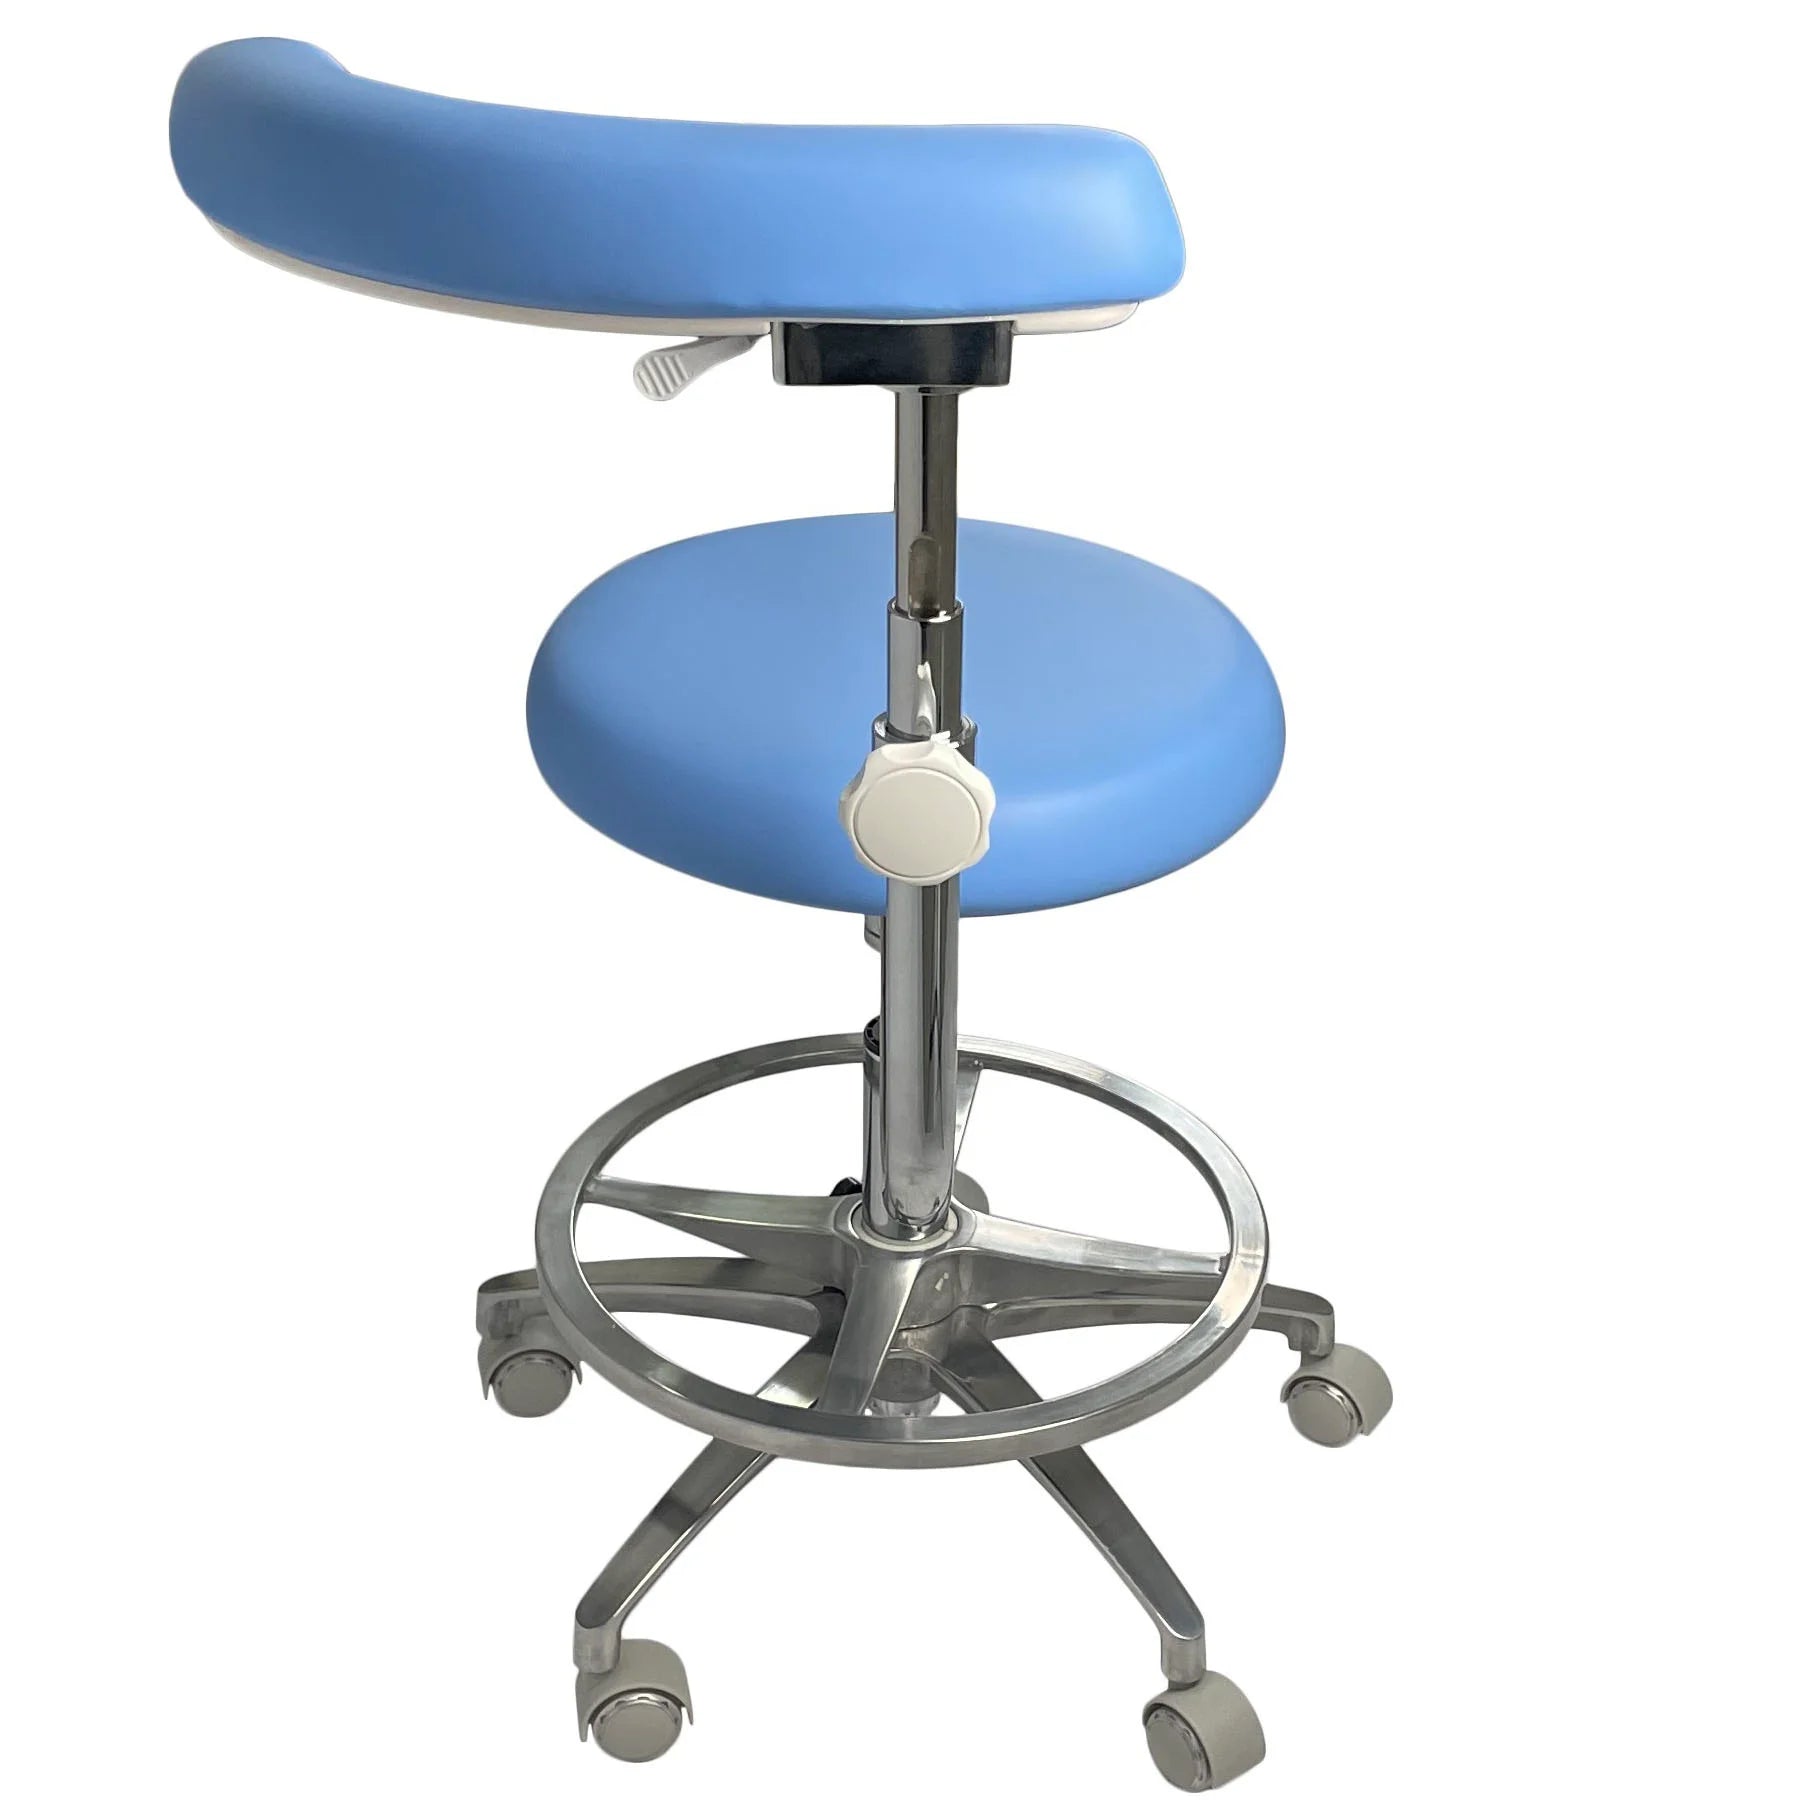 the torso suport high quality for dental stool